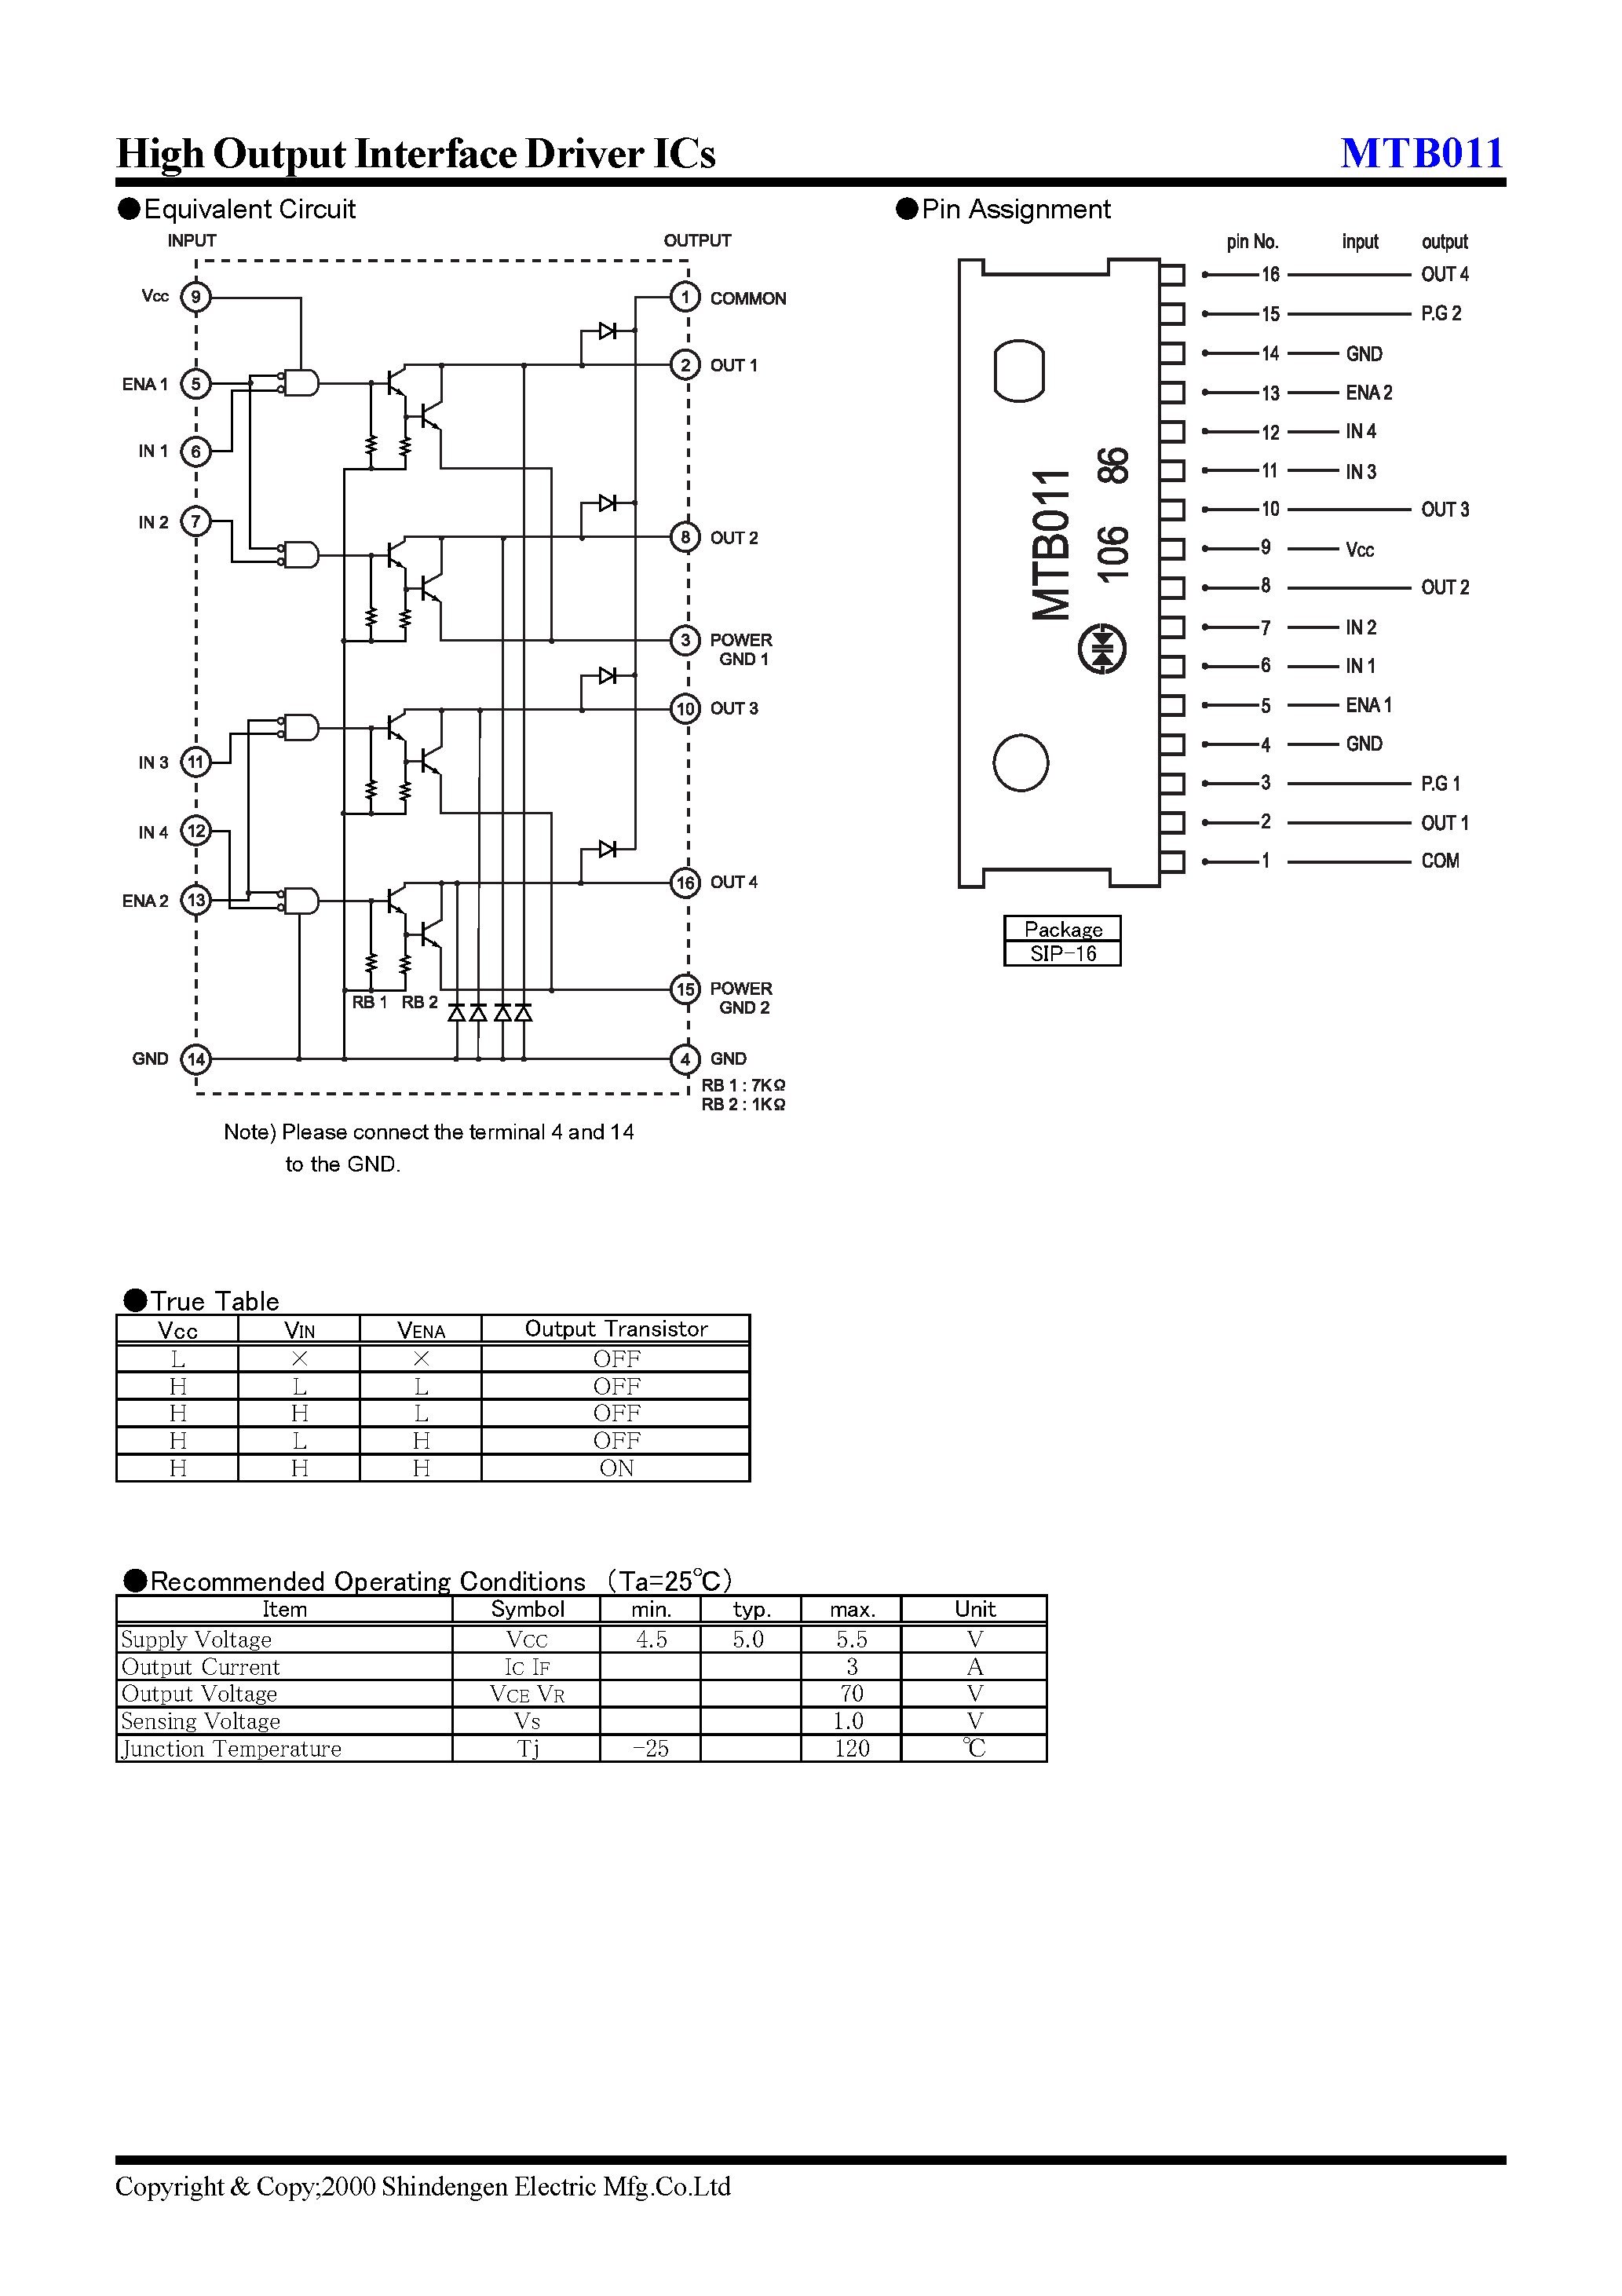 Datasheet MTB011 - High Output Interface Driver ICs page 2